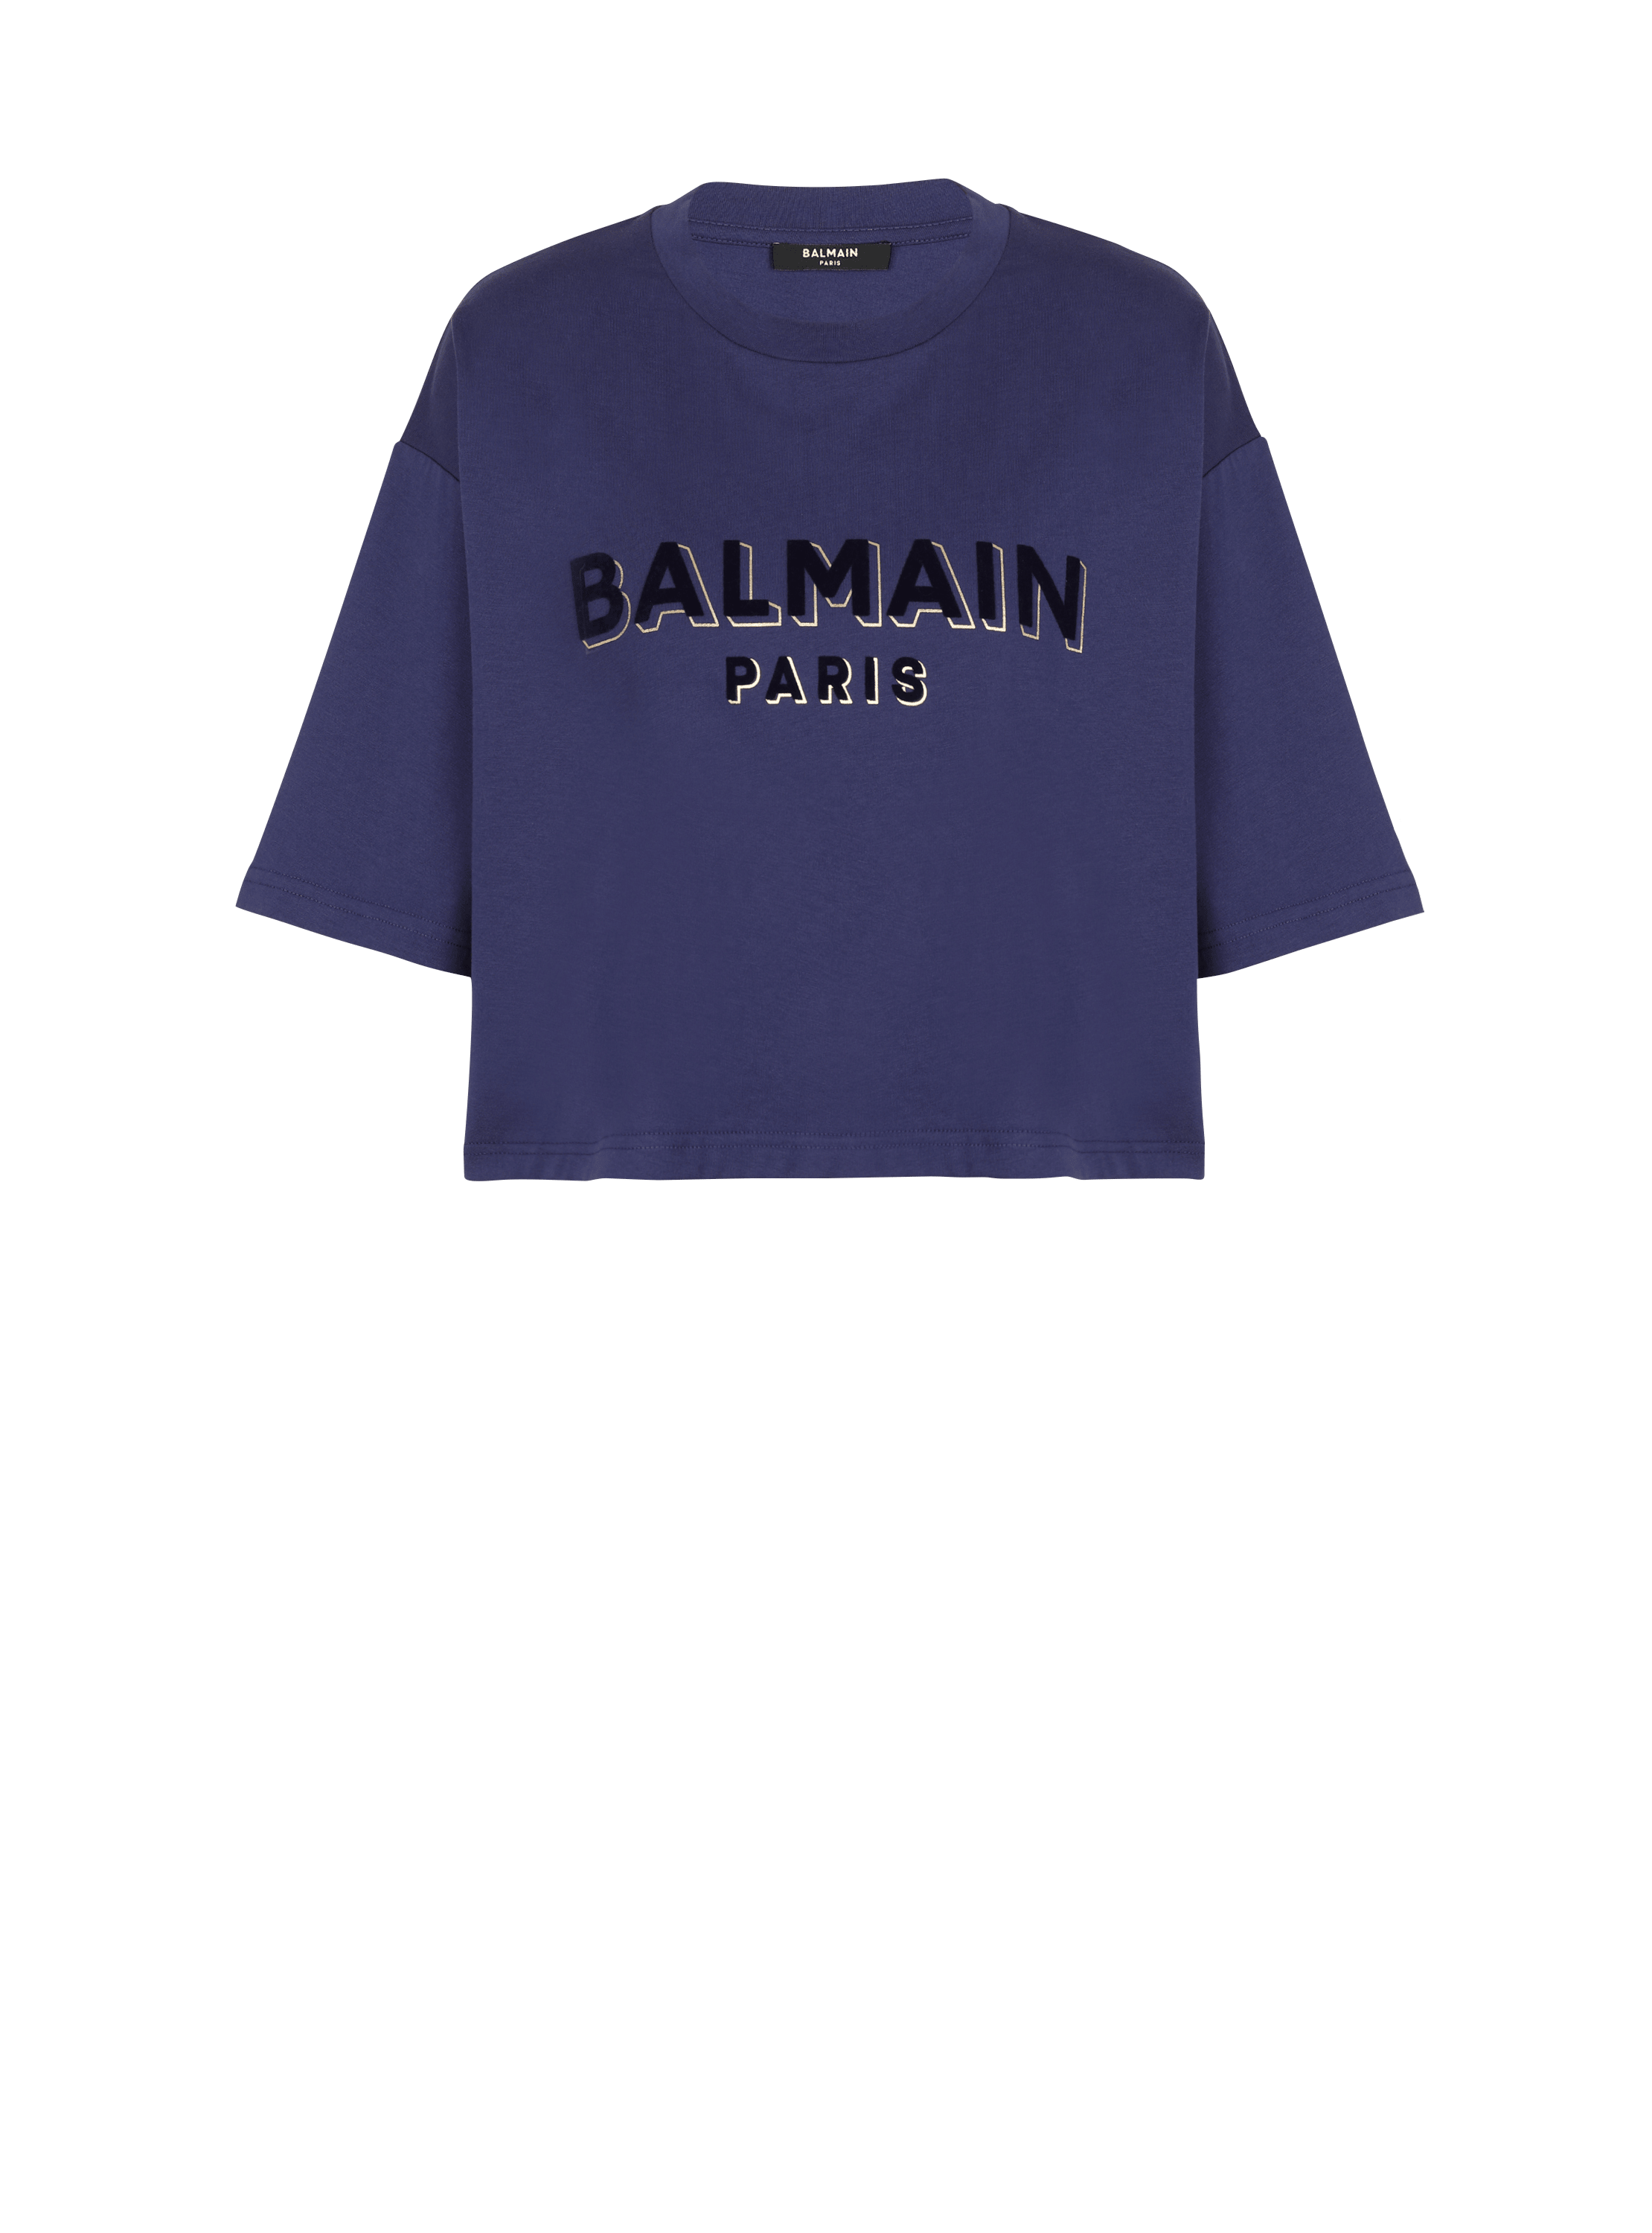 T-shirt court en coton à logo Balmain métallique floqué, bleu, hi-res